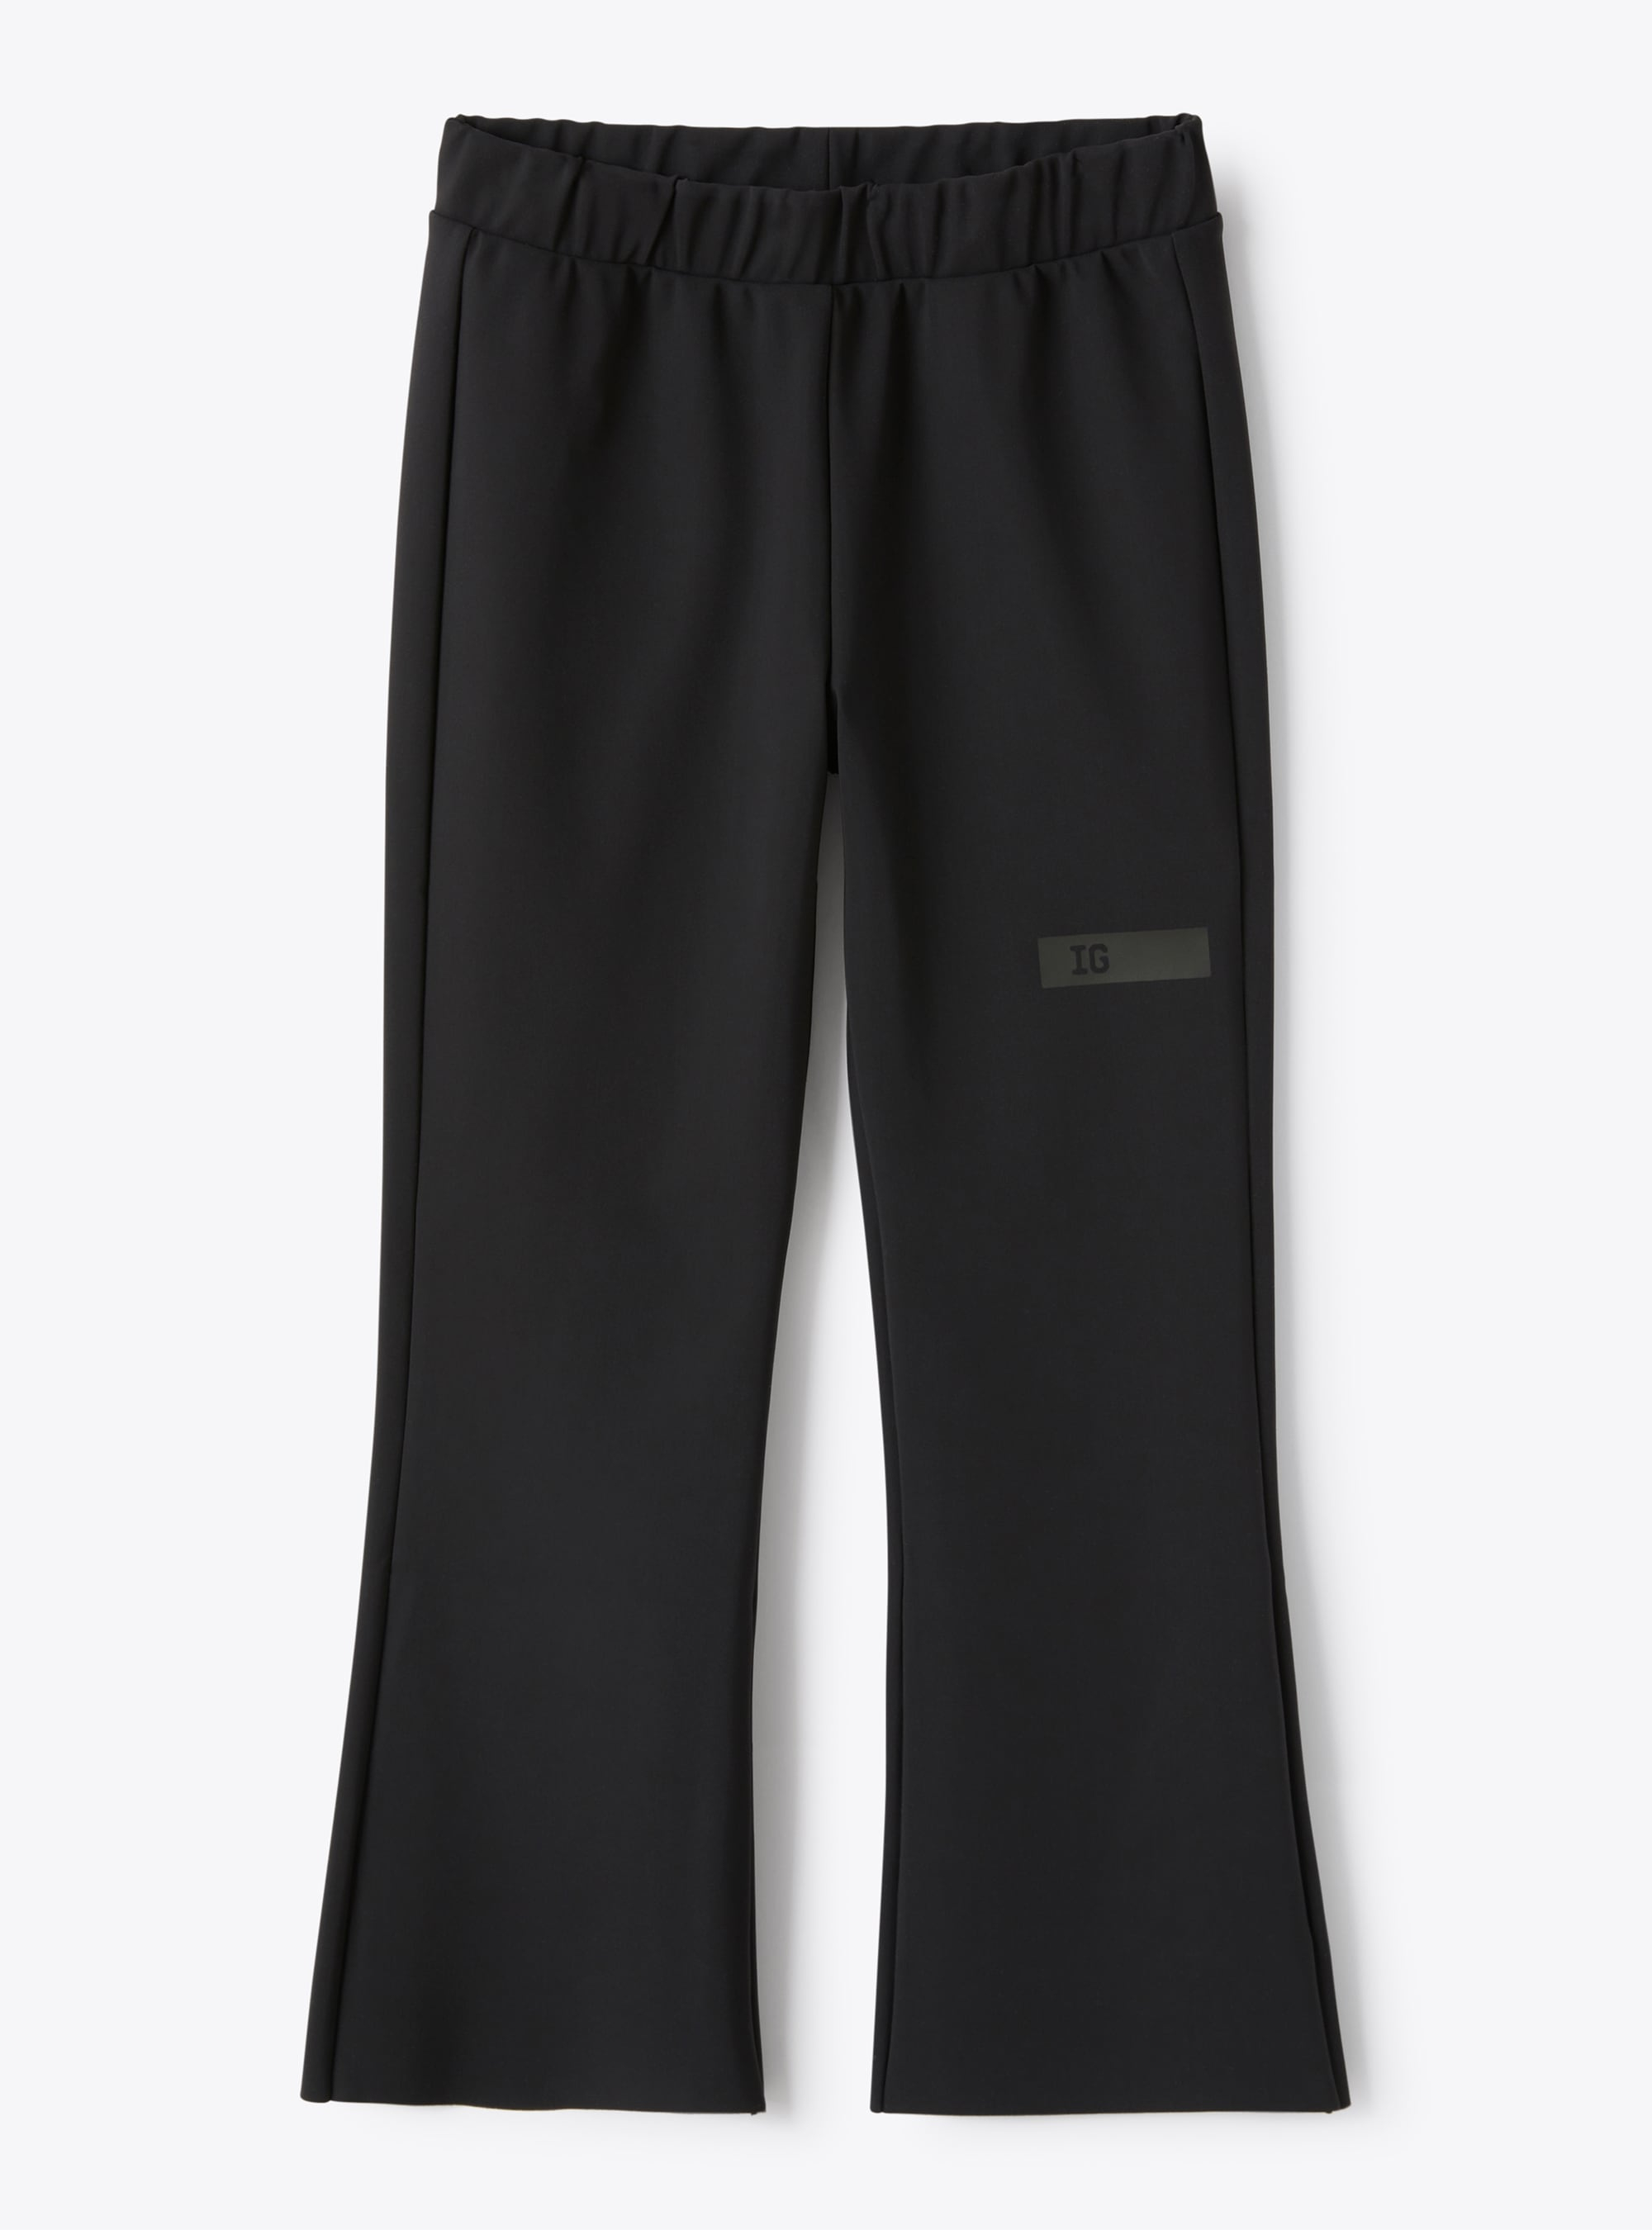 Trousers in black Sensitive® Fabrics material - Trousers - Il Gufo